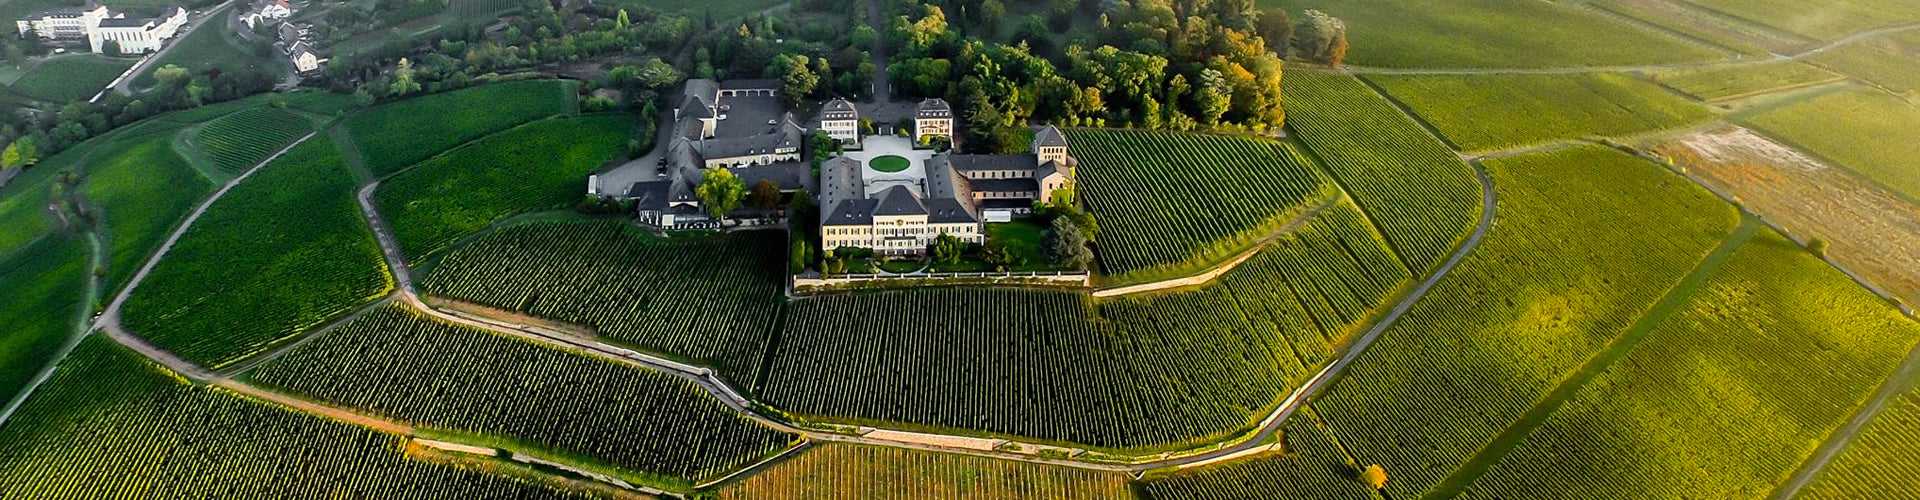 Schloss Johannisberg Estate and Vineyards